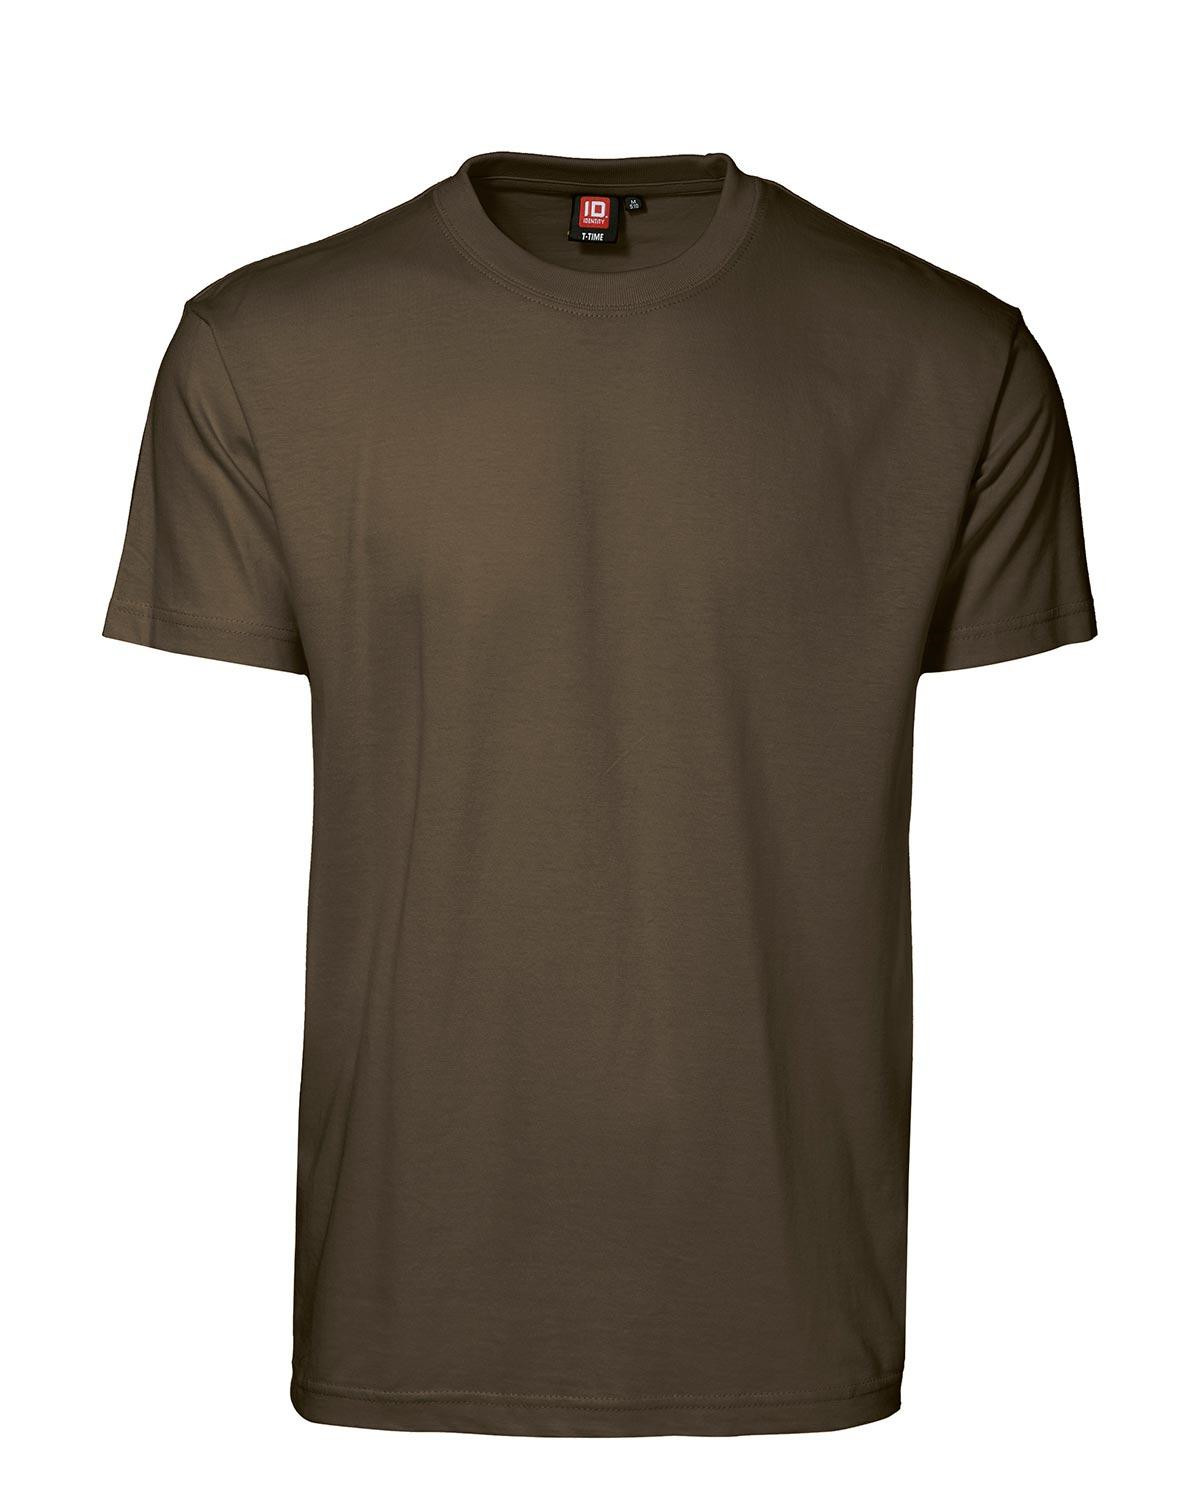 Billede af ID T-Time T-shirt, rund hals (Oliven, 3XL) hos Army Star